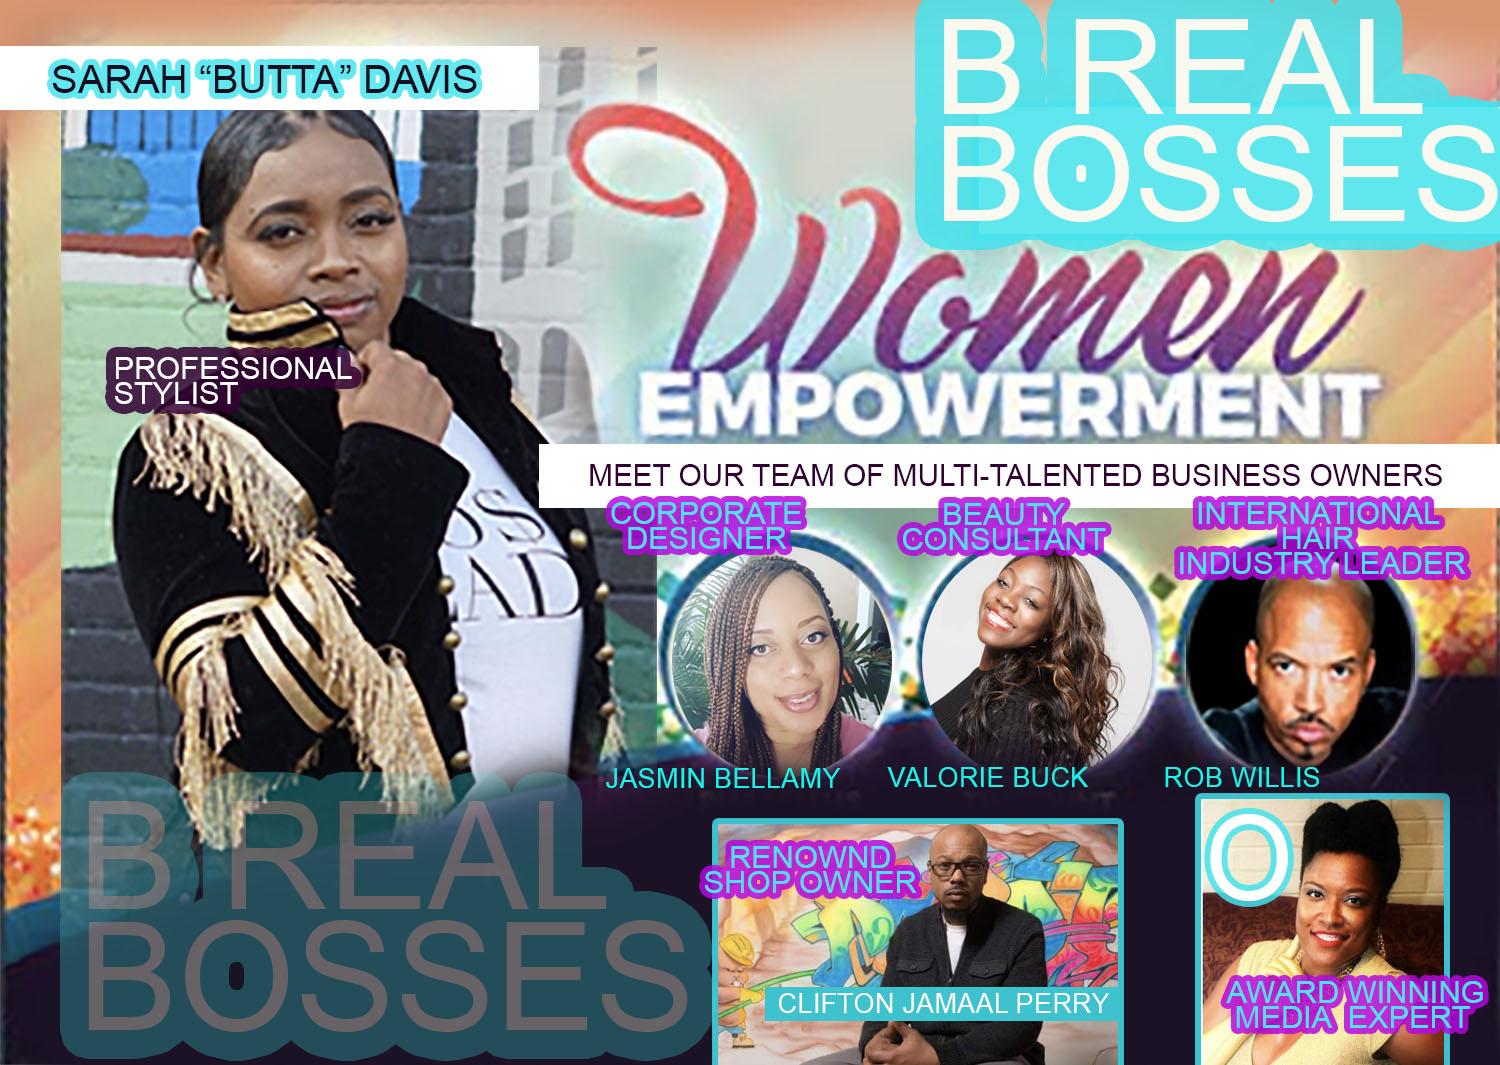 B Real Bosses Women Empowerment Workshops